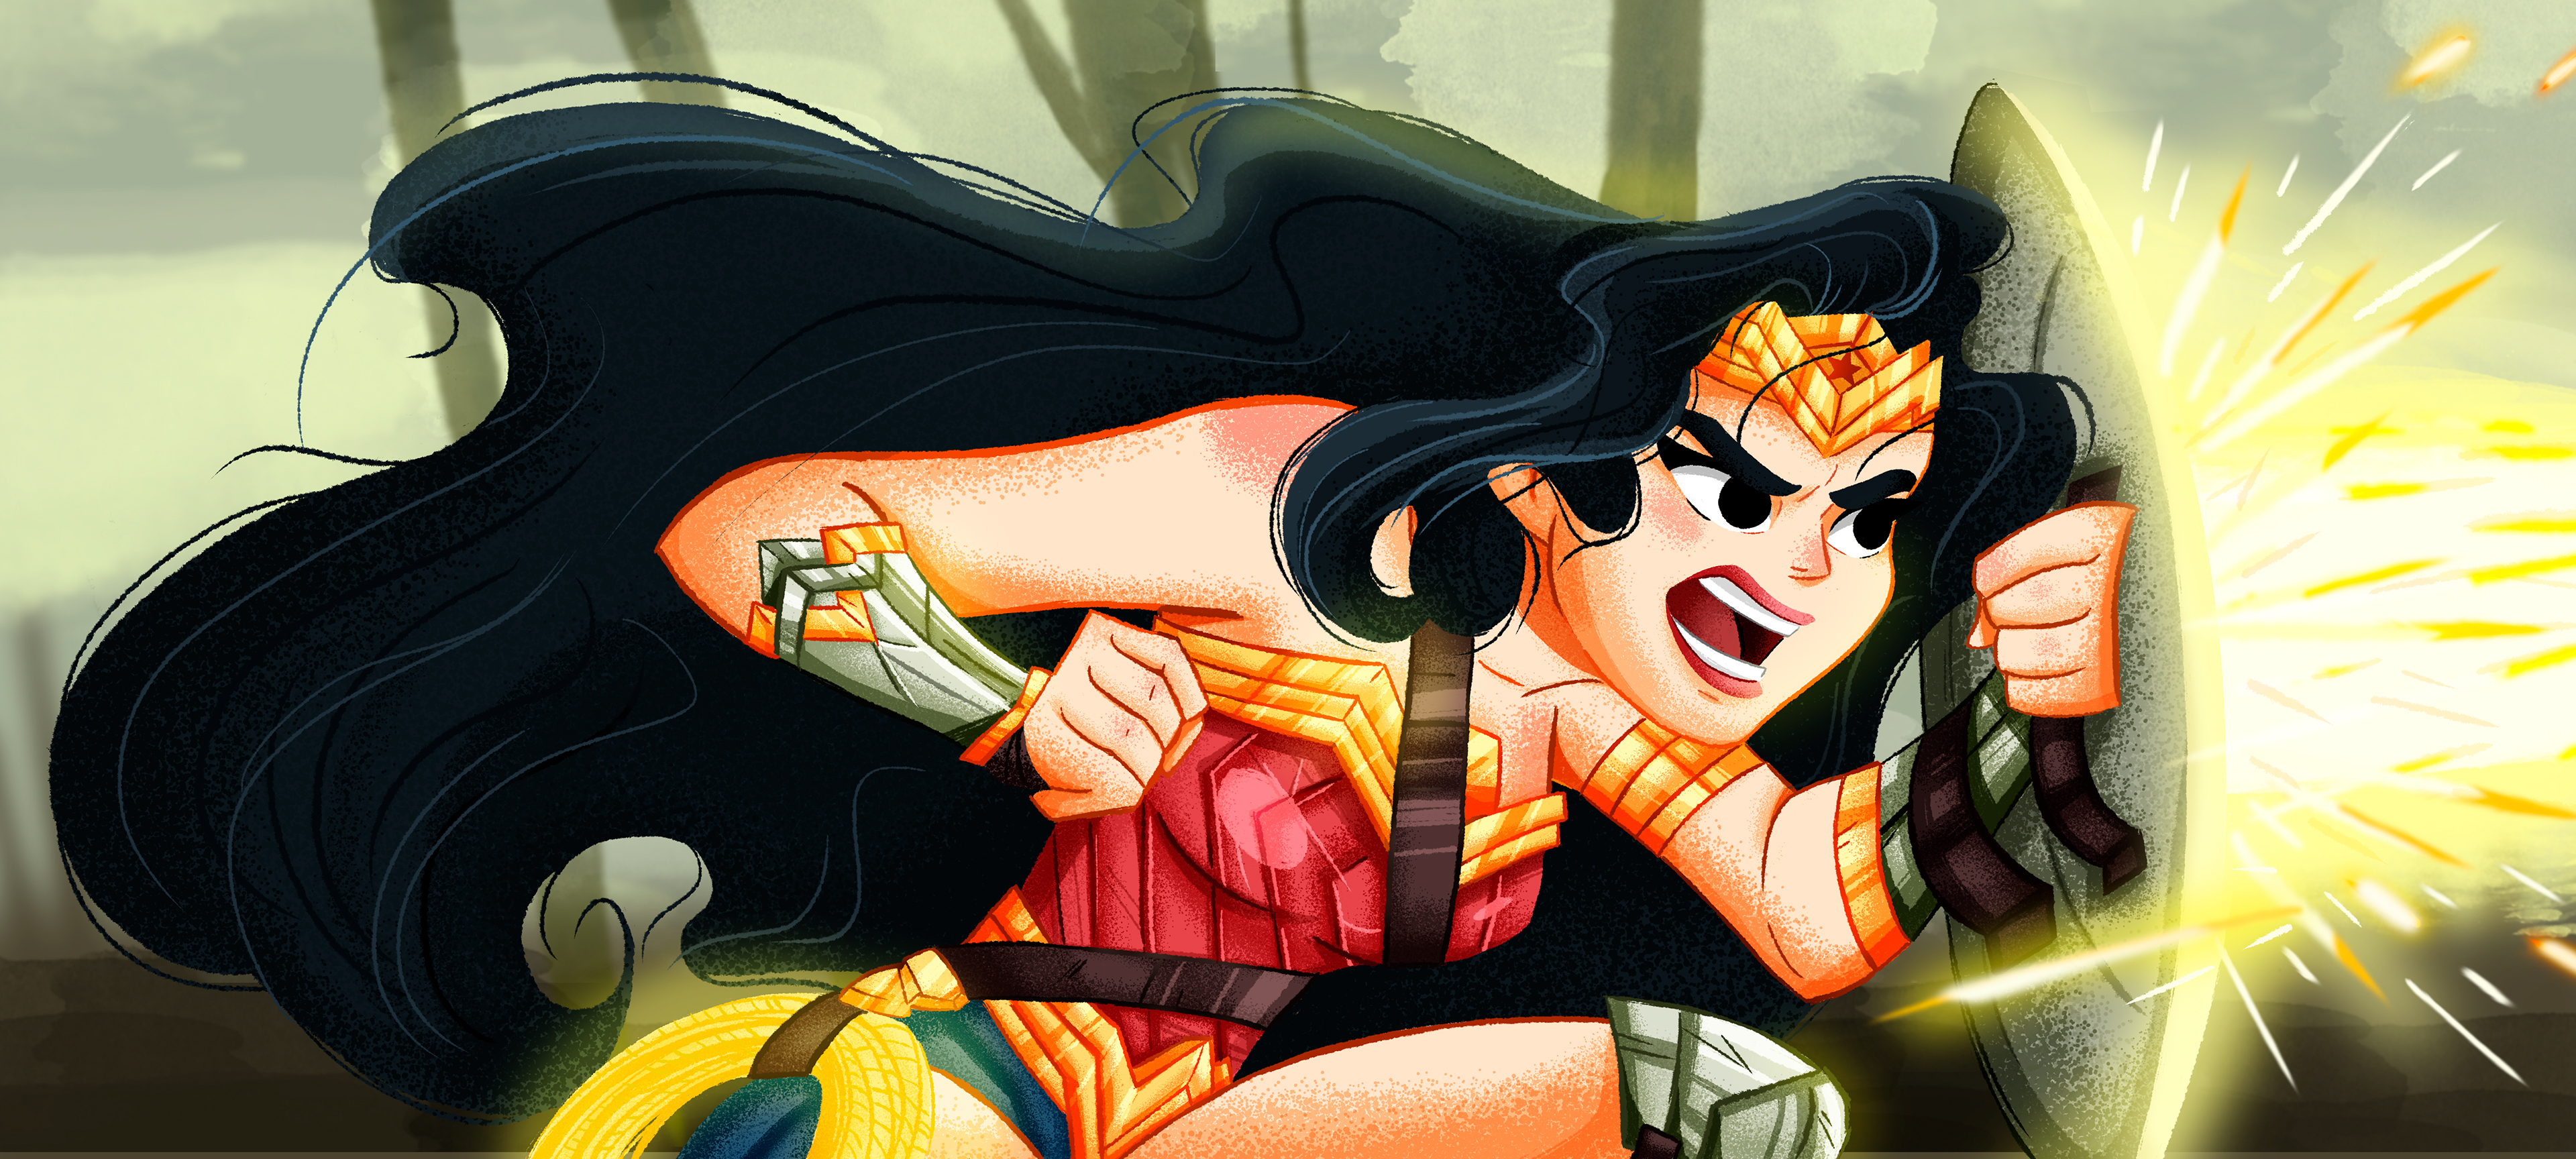 Wallpaper Wonder Woman Illustration